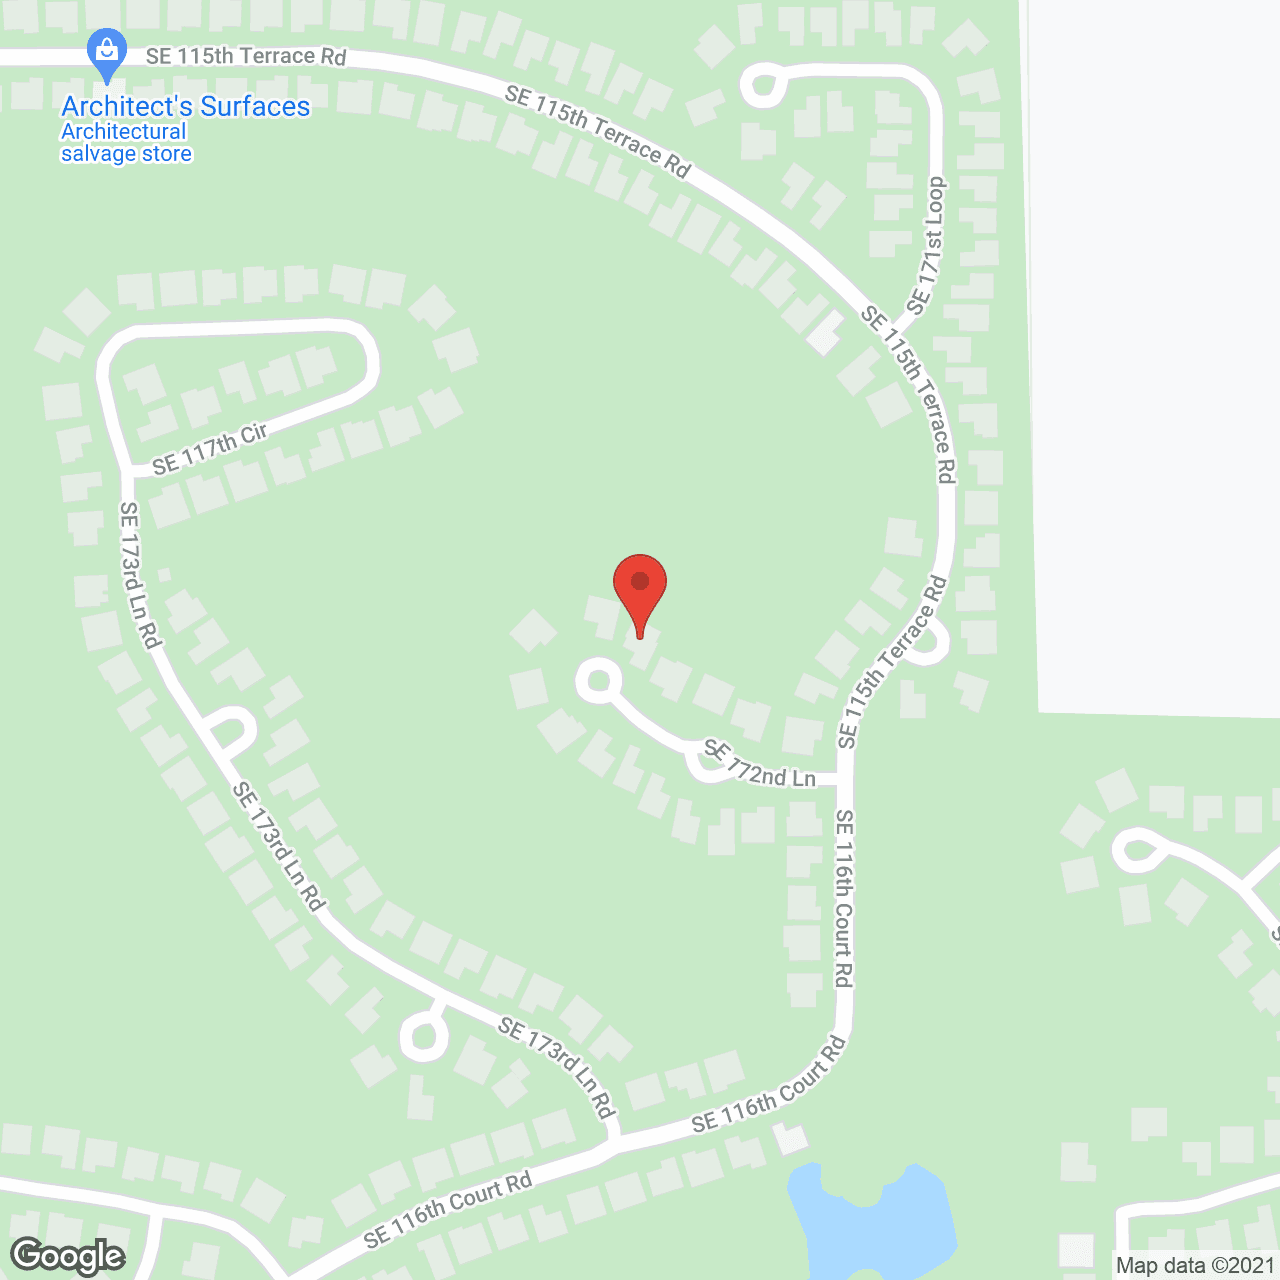 Stonecrest Residential Cmnty in google map